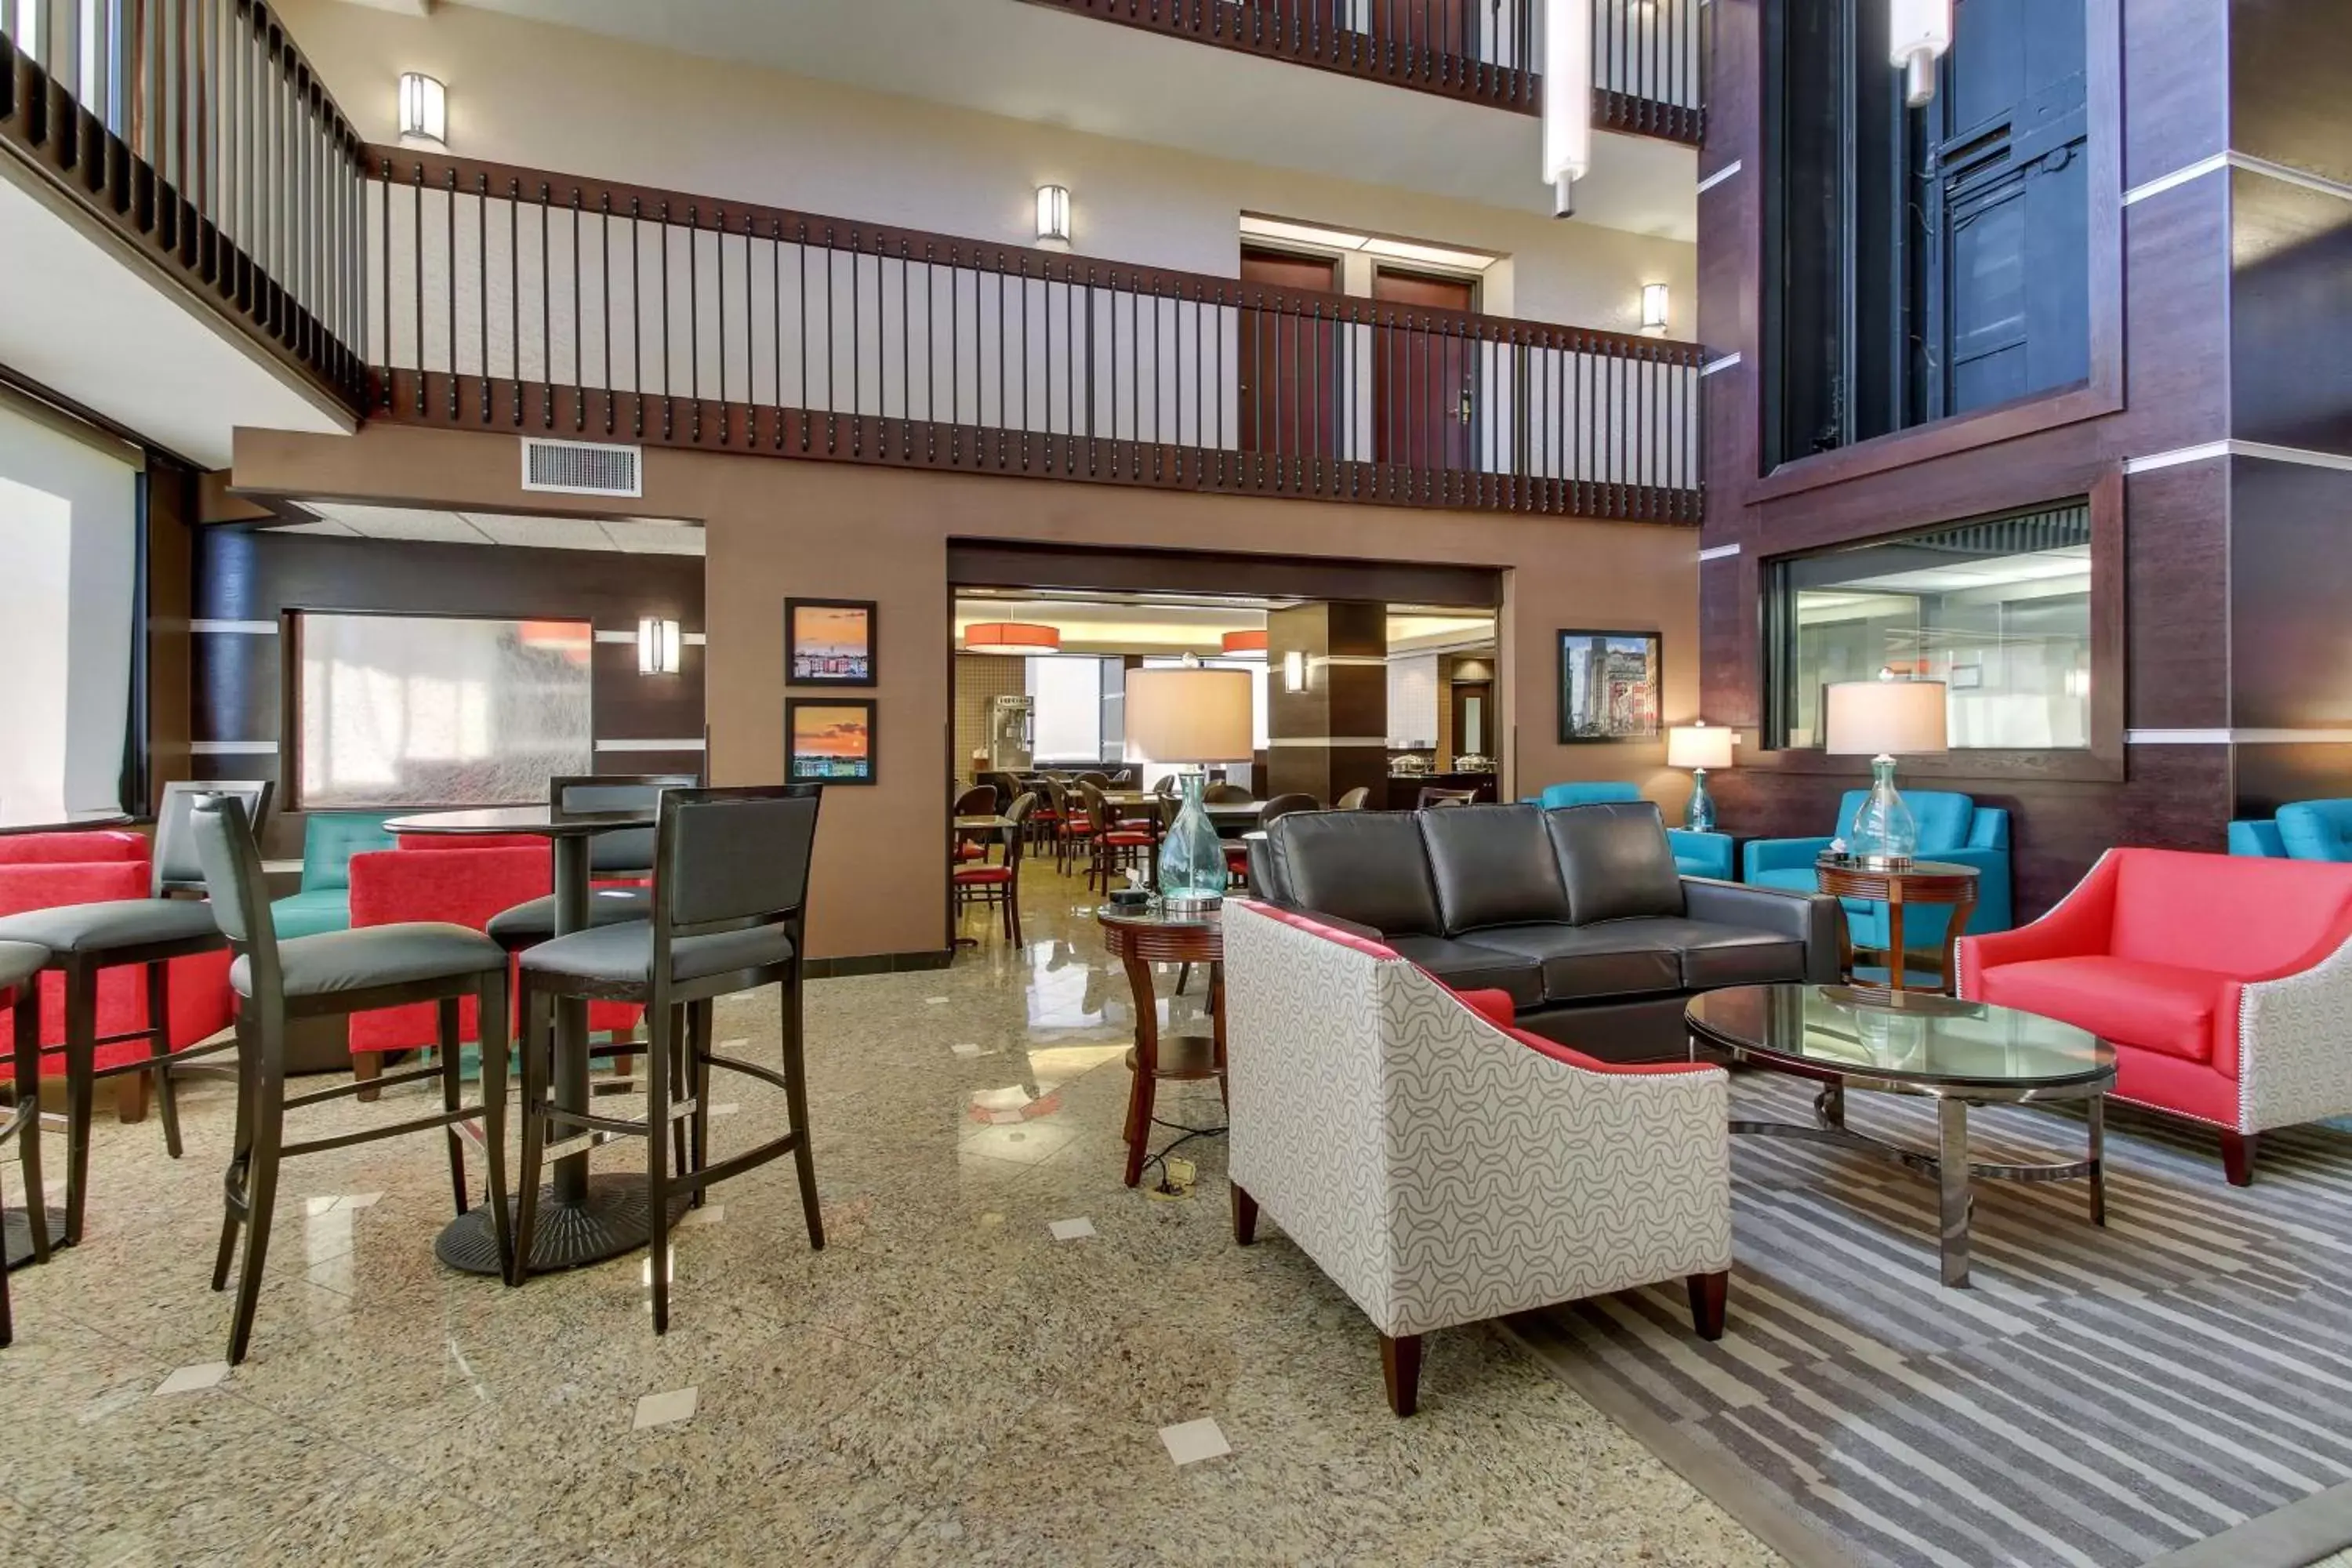 Lobby or reception in Drury Inn & Suites Houston Sugar Land